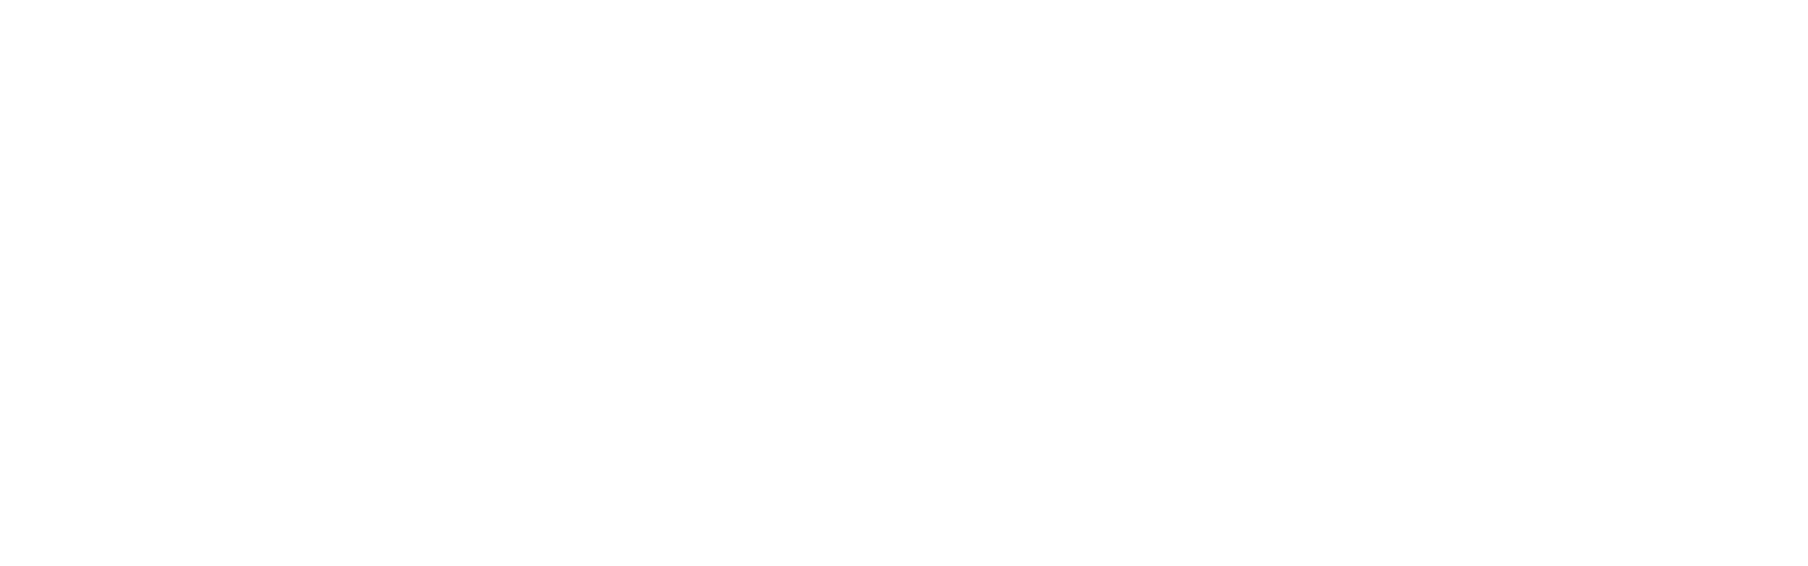 SKI RUN Čakovice [OCR team]